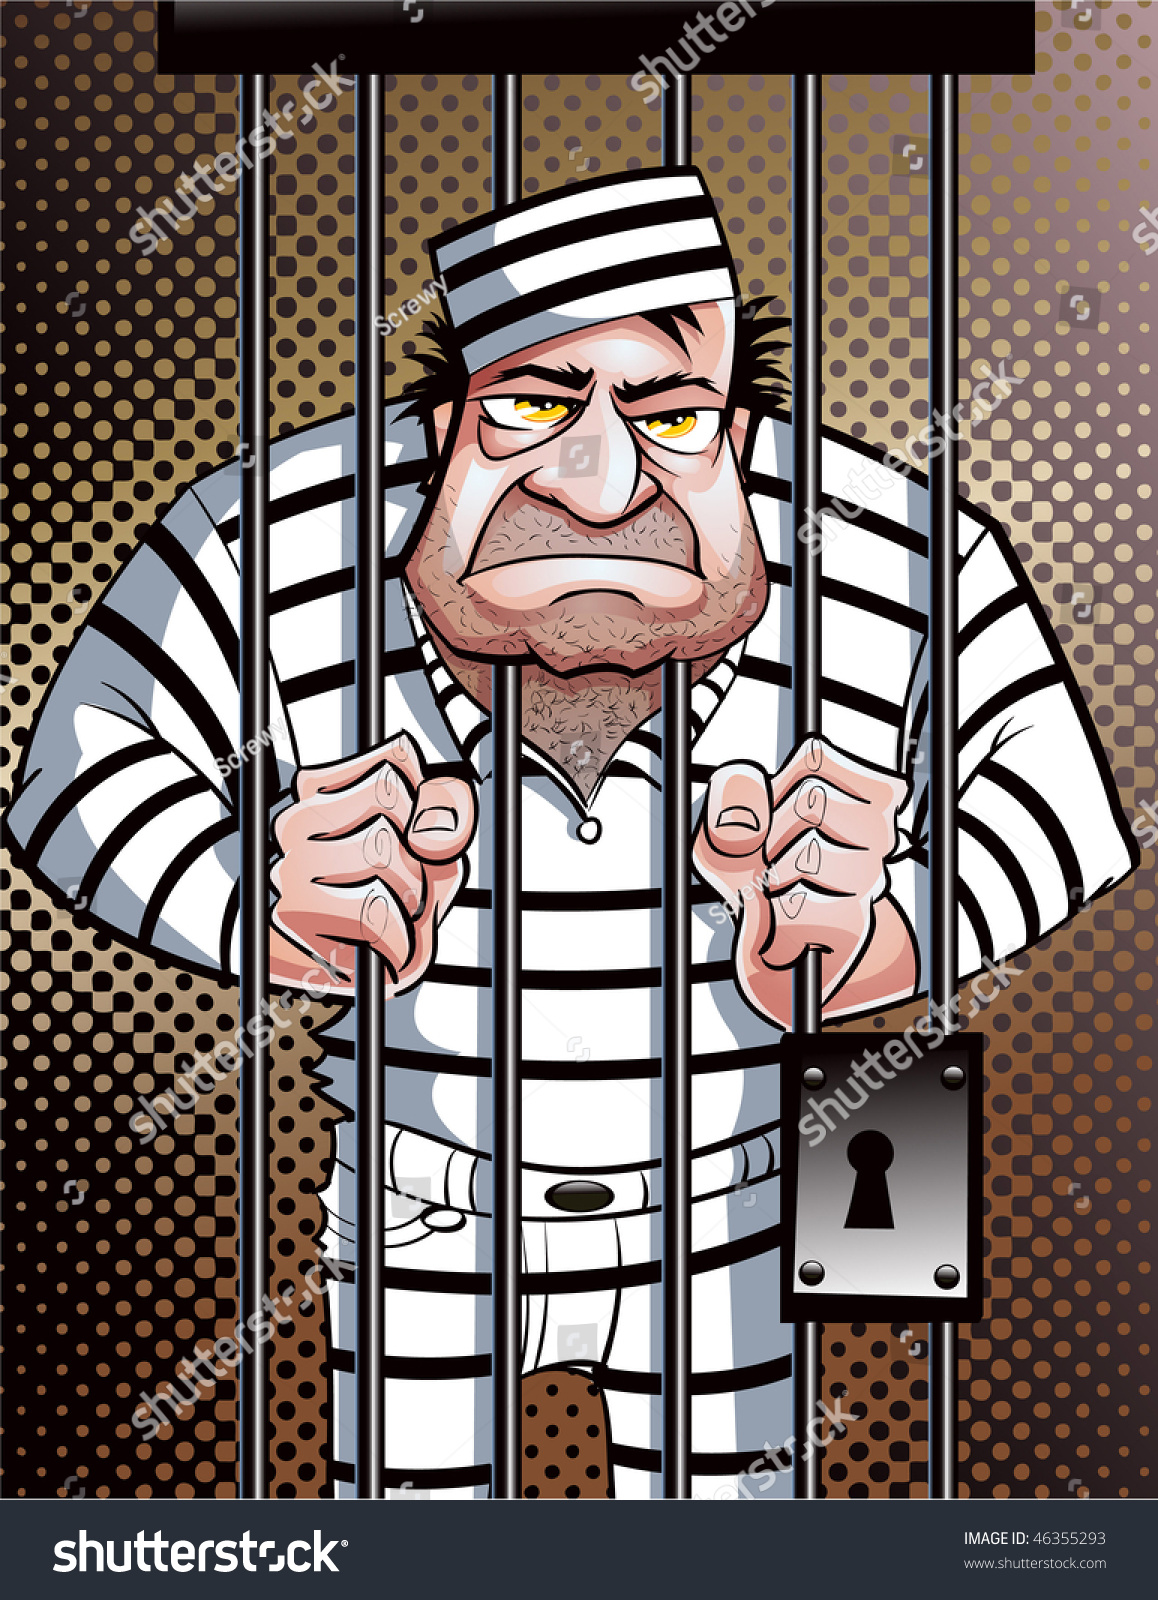 man behind bars clipart - photo #19